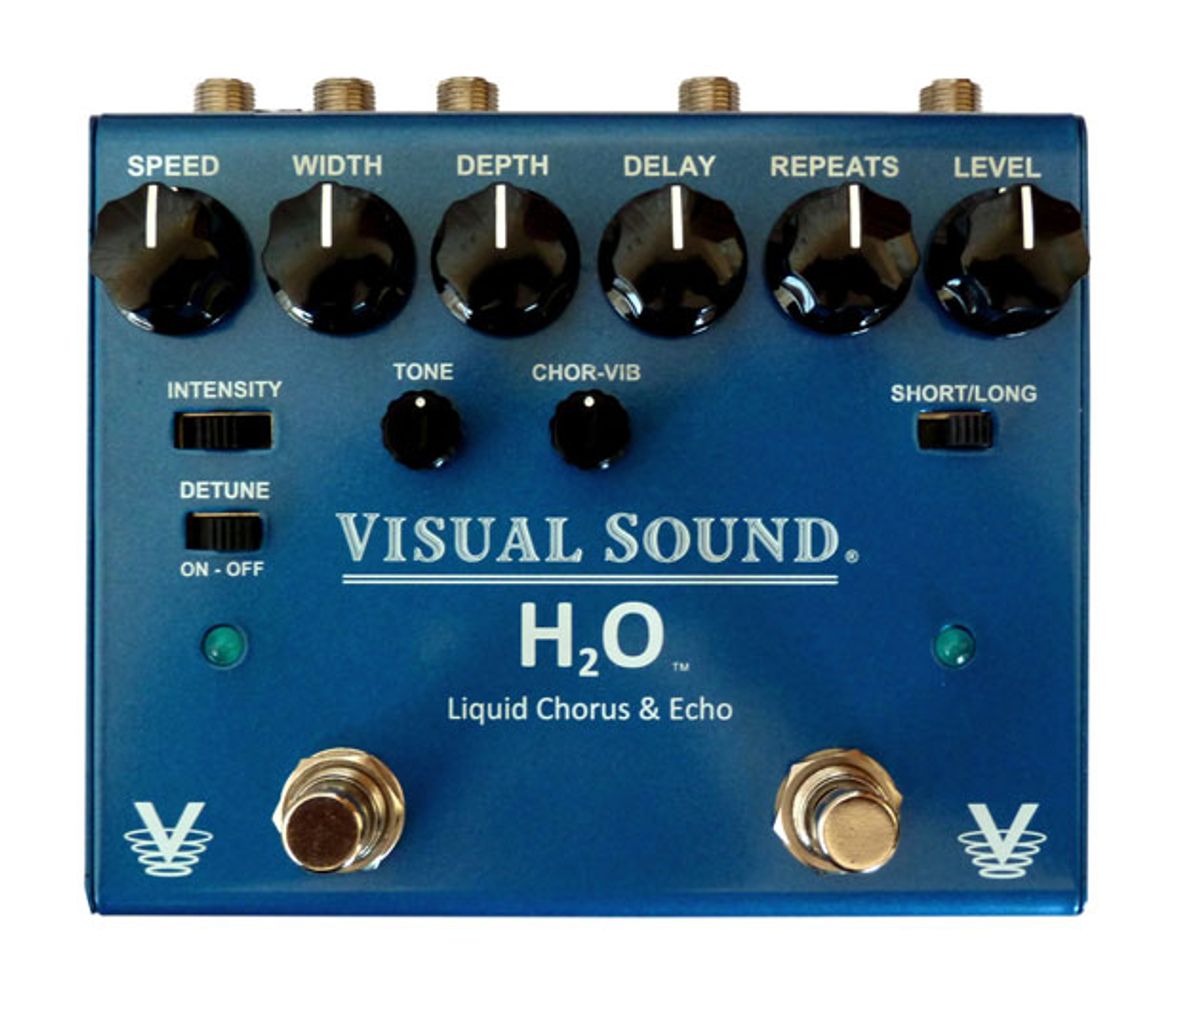 Visual Sound Releases the H20 Liquid Chorus & Echo Pedal